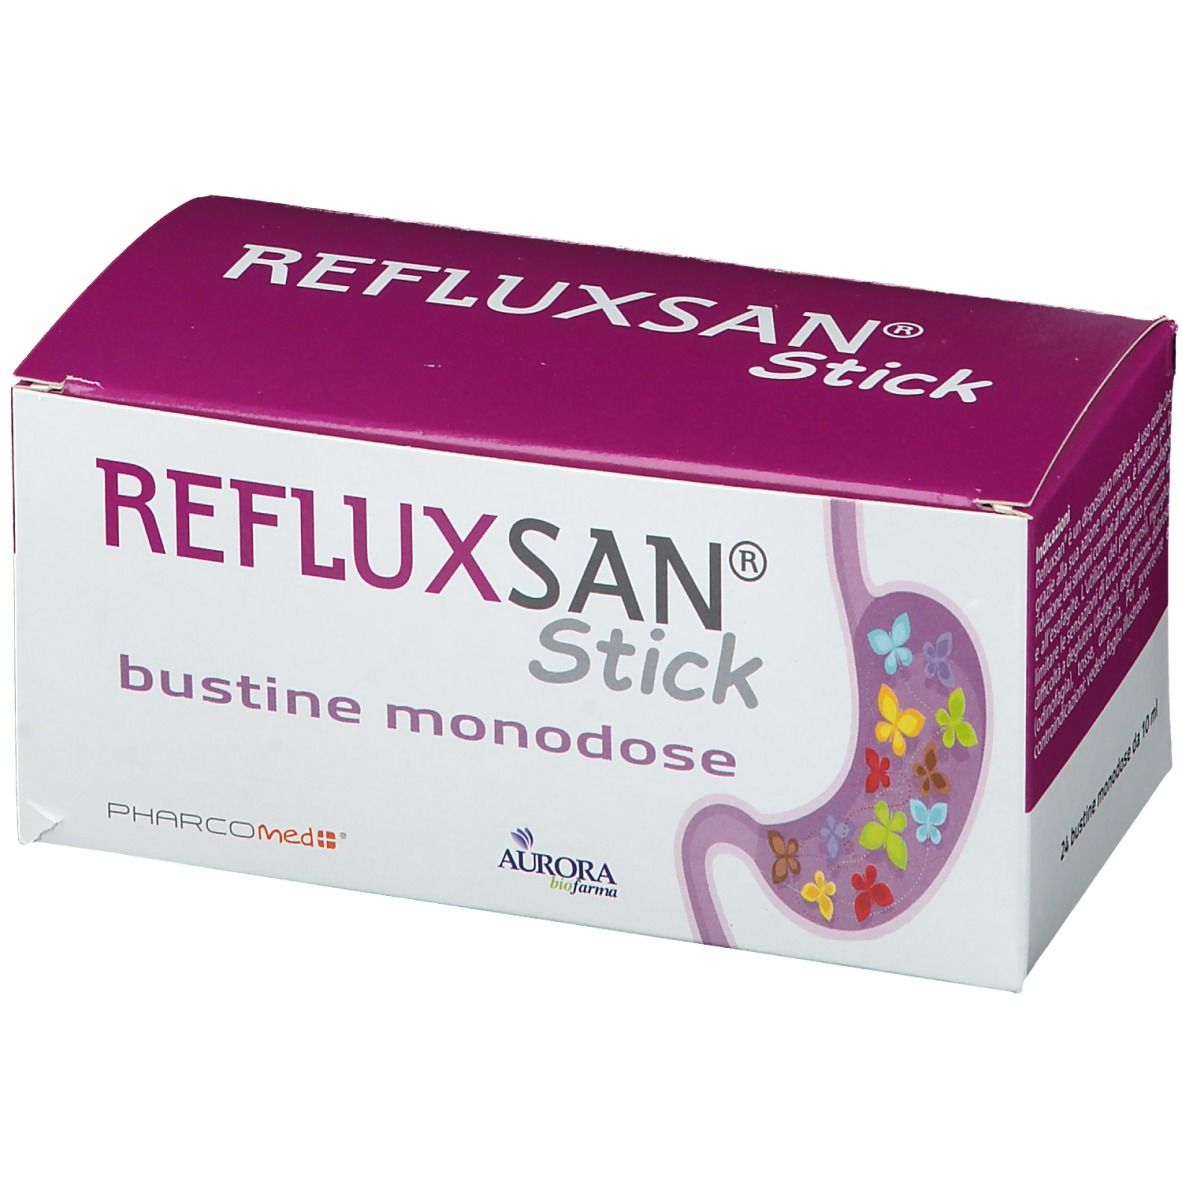 Refluxsan® Stick